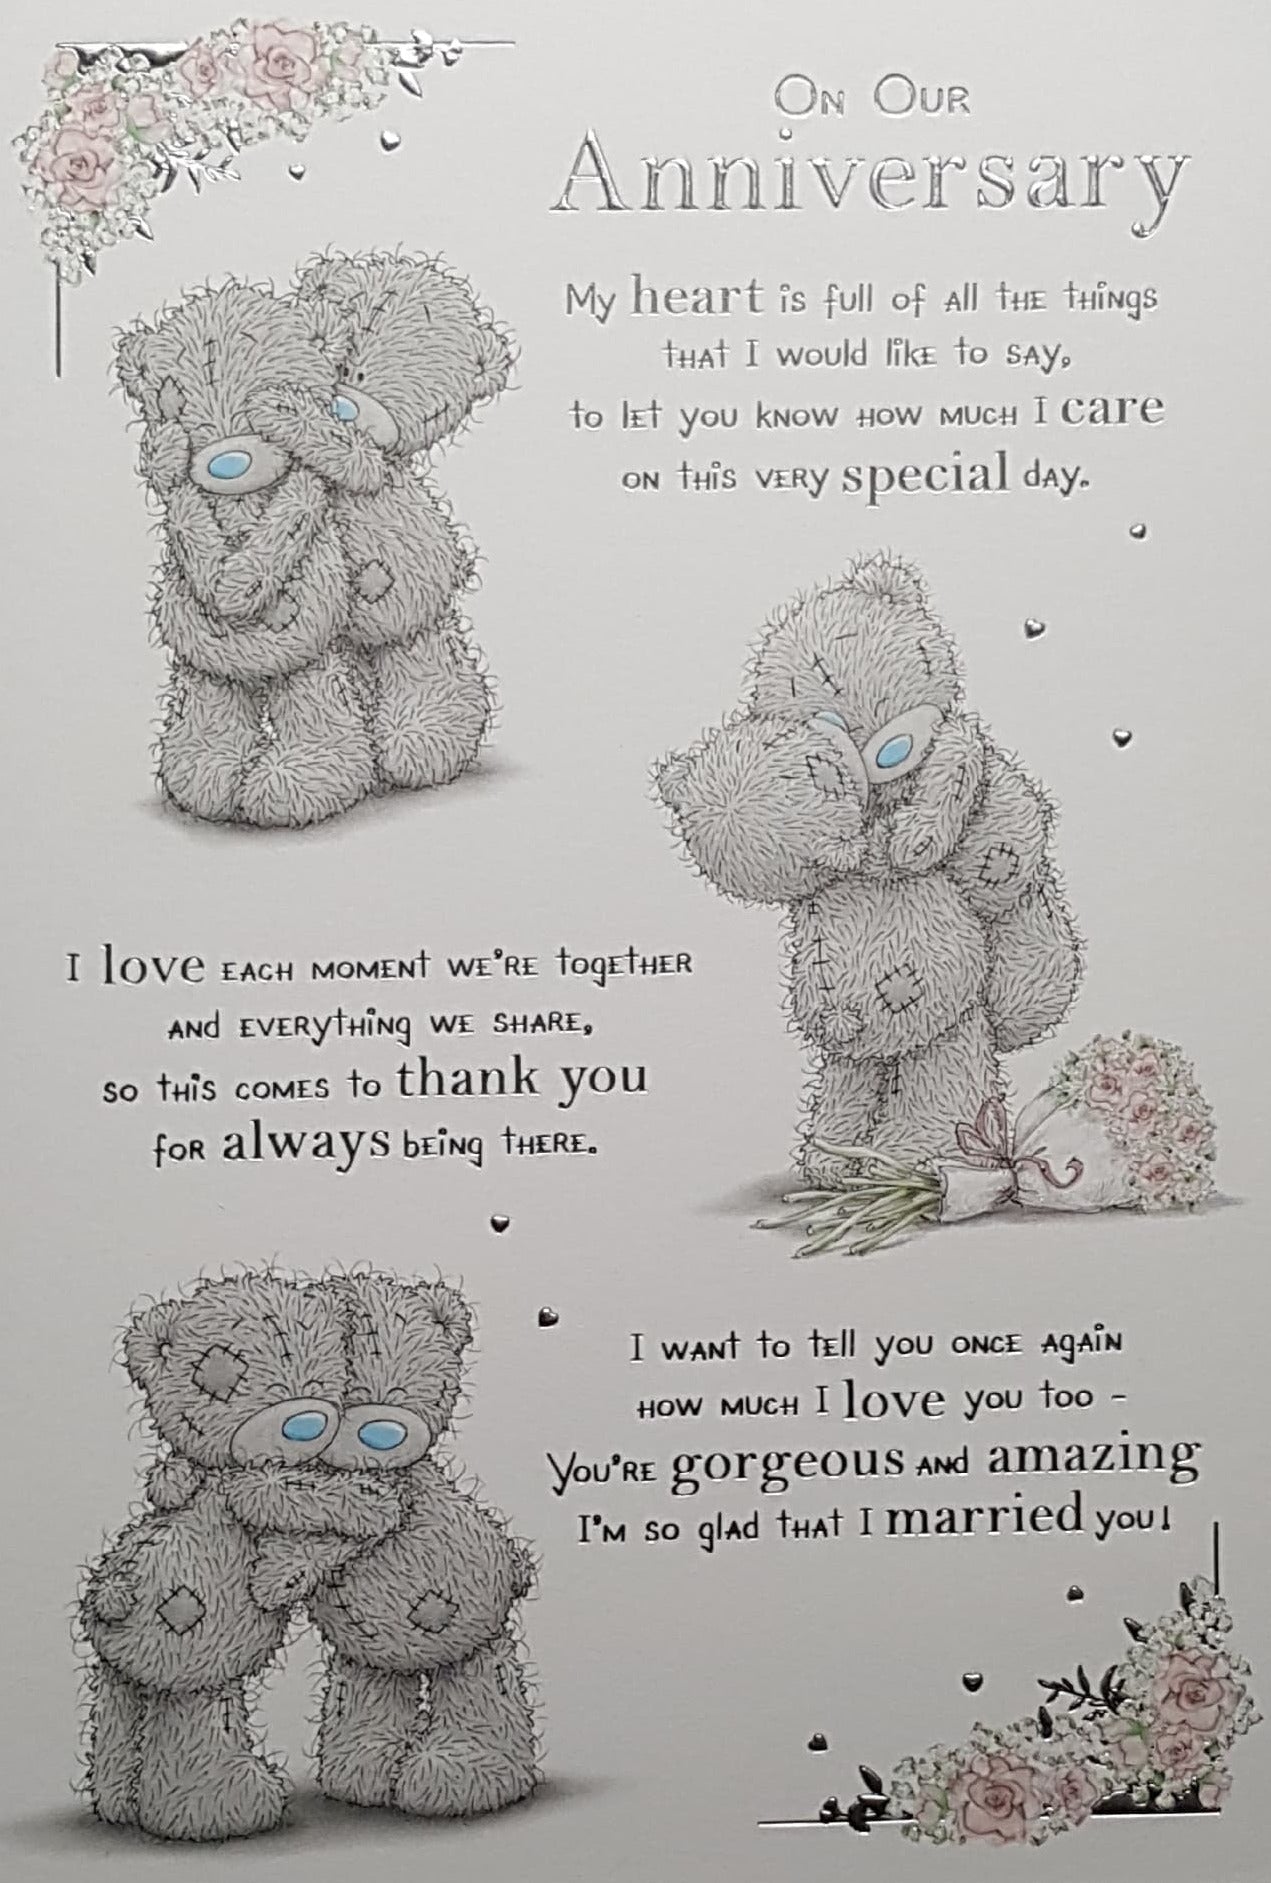 Anniversary Card - Cute Teddy Couple & Verses